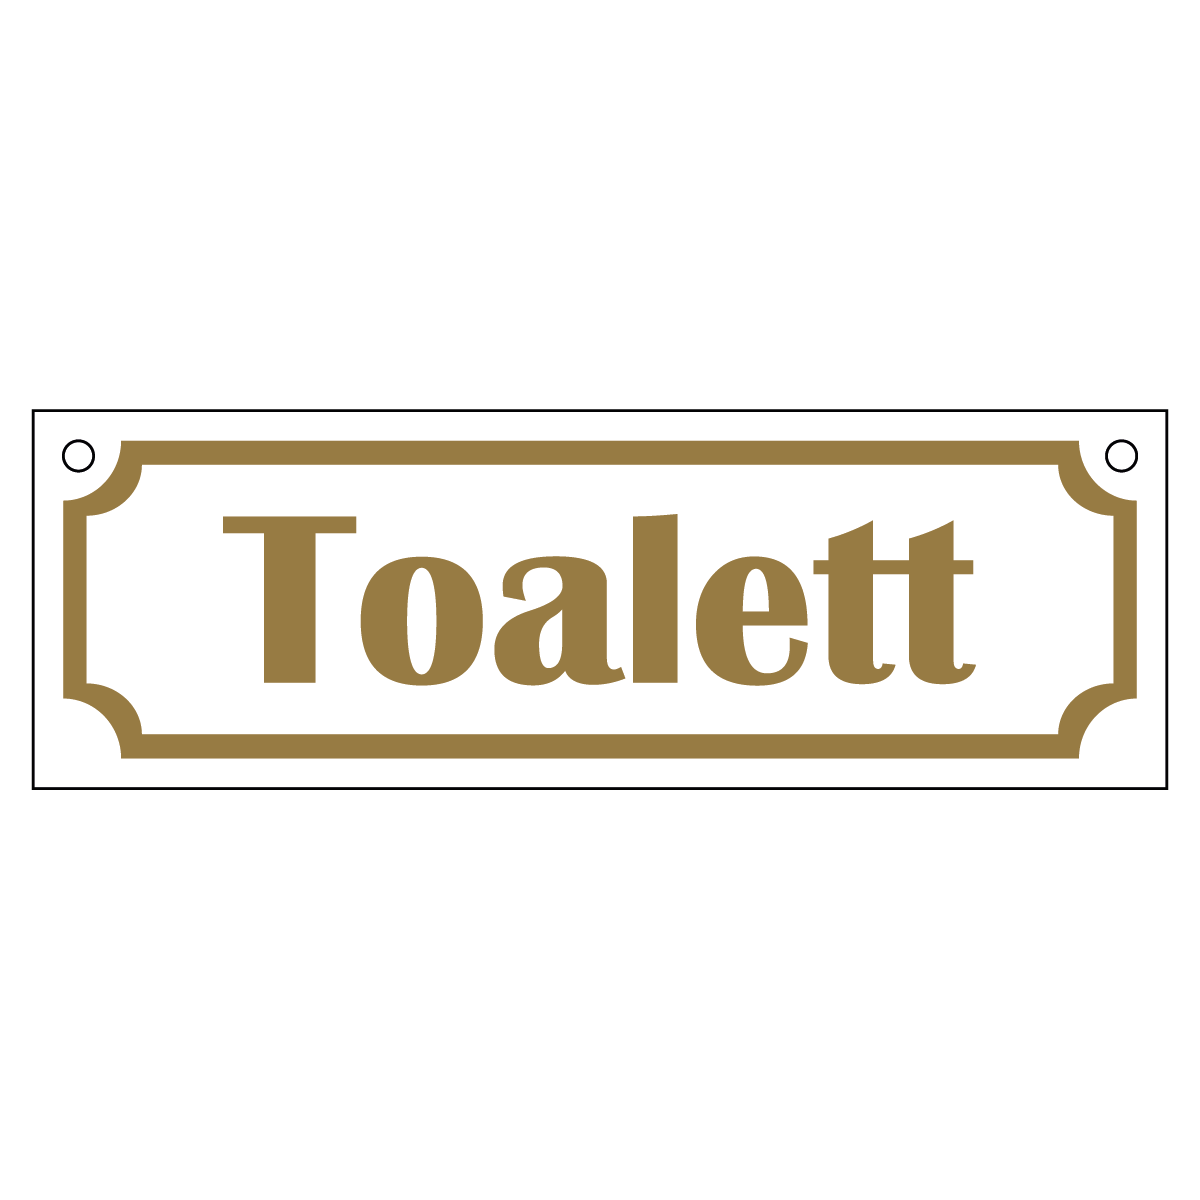 Toalett - Skylt - 150x50mm - Vit - Guld